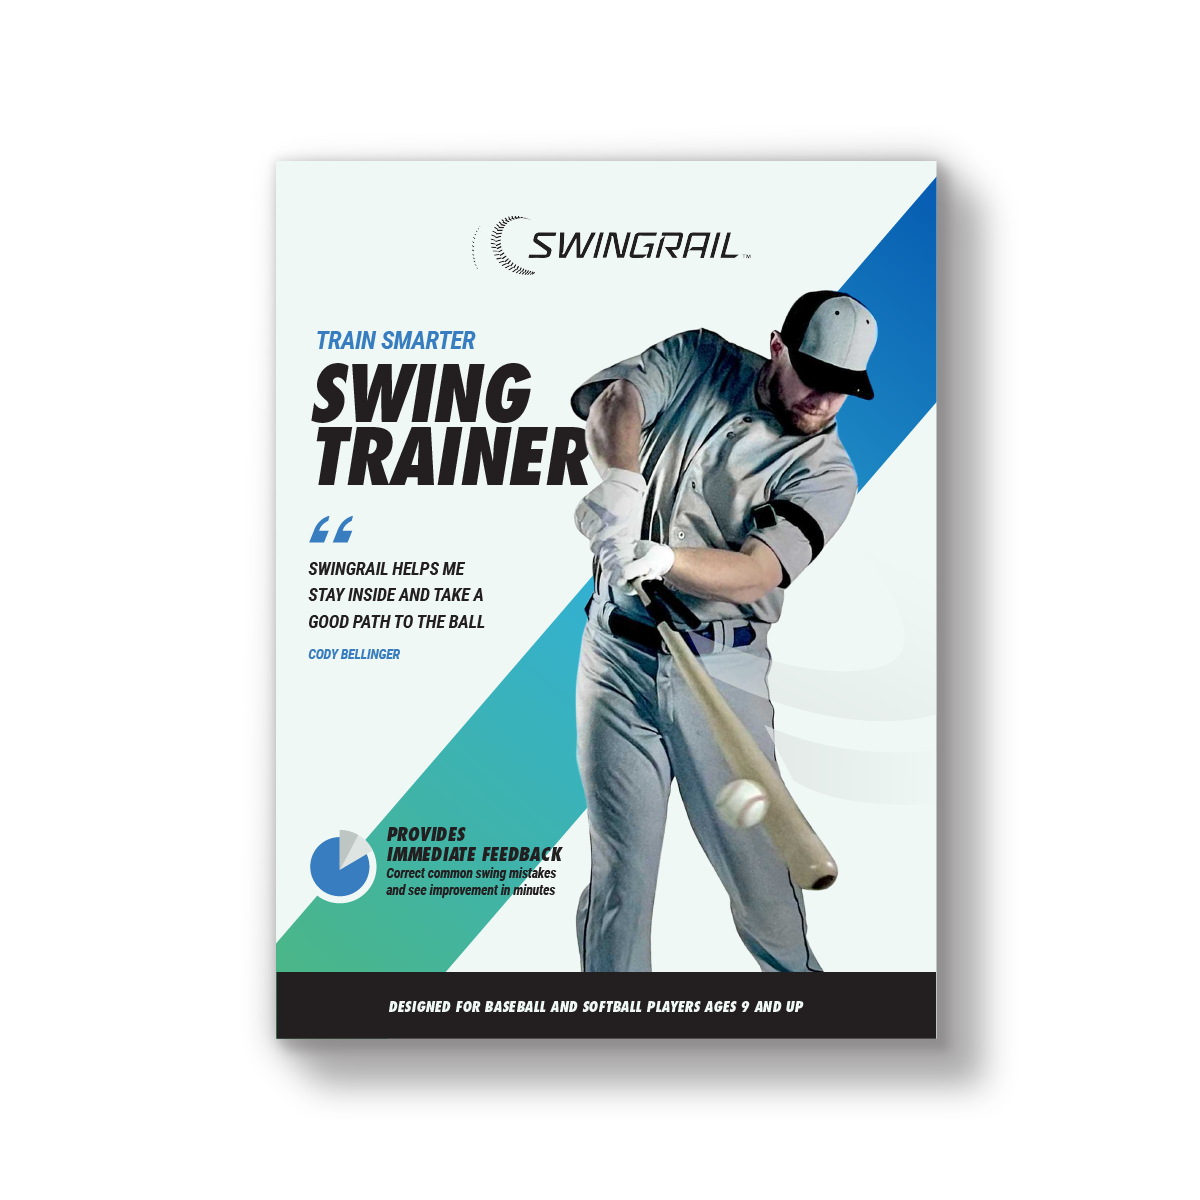 Swingrail Swing Trainer is a great baseball training aid to improve hitting, swingrail, swing rail